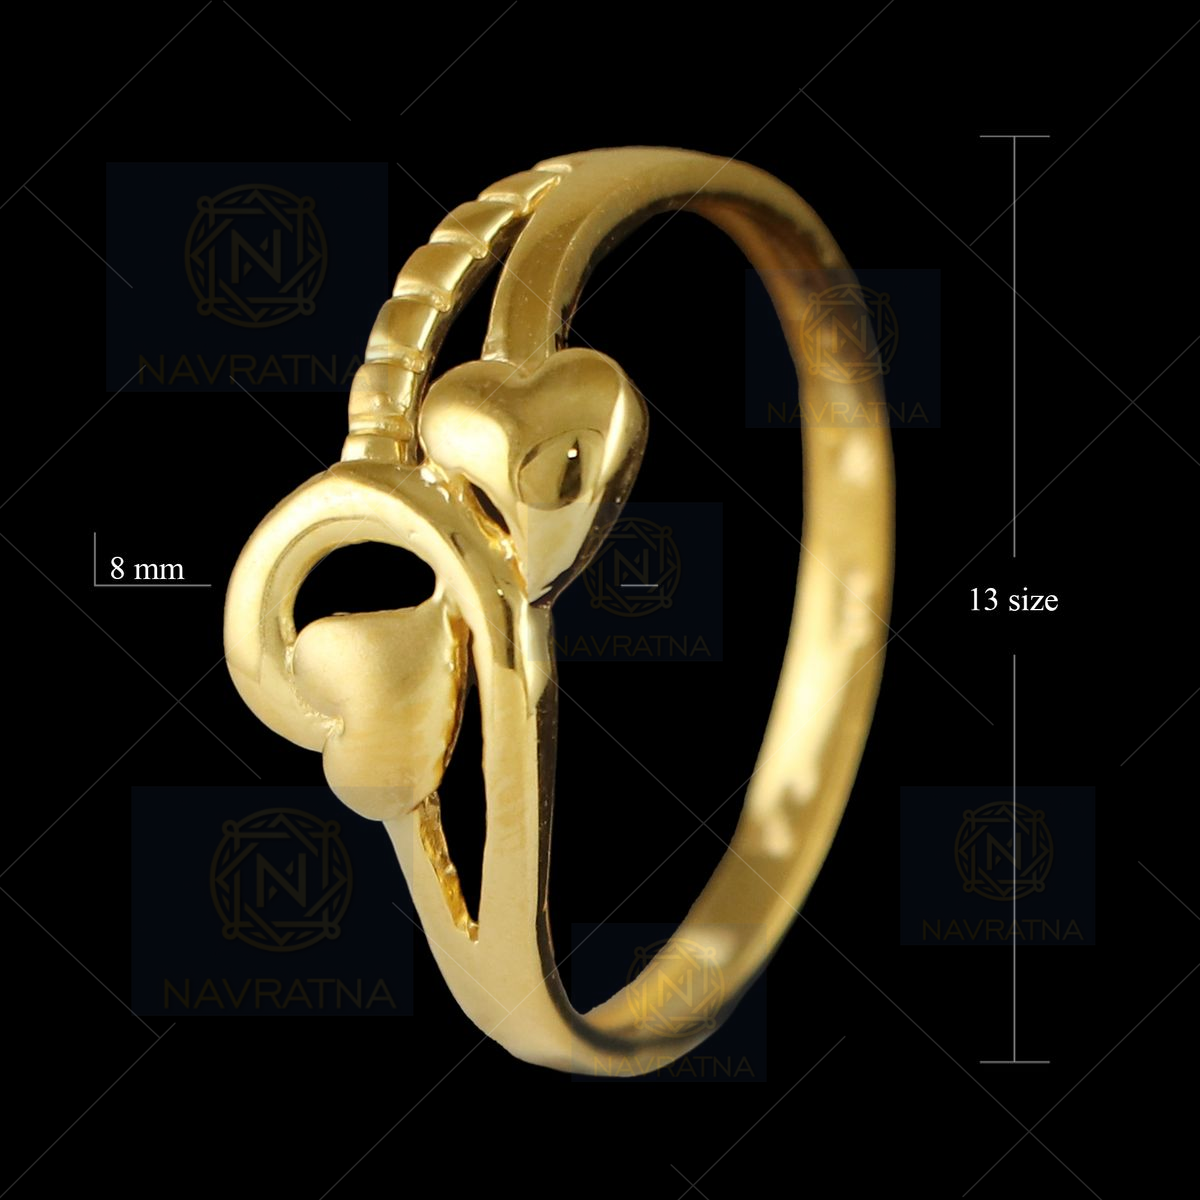 Buy 7clouds Premium Collection Real पुखराज की अंगूठी AAA+++ Rated श्रीलंकन  येलो सफायर पुखराज रत्न ओरिजिनल रिंग Yellow Sapphire Ring Original Certified  By Lab 18Kt Kanaka Pushya Raga Stone Yellow Gold Ring